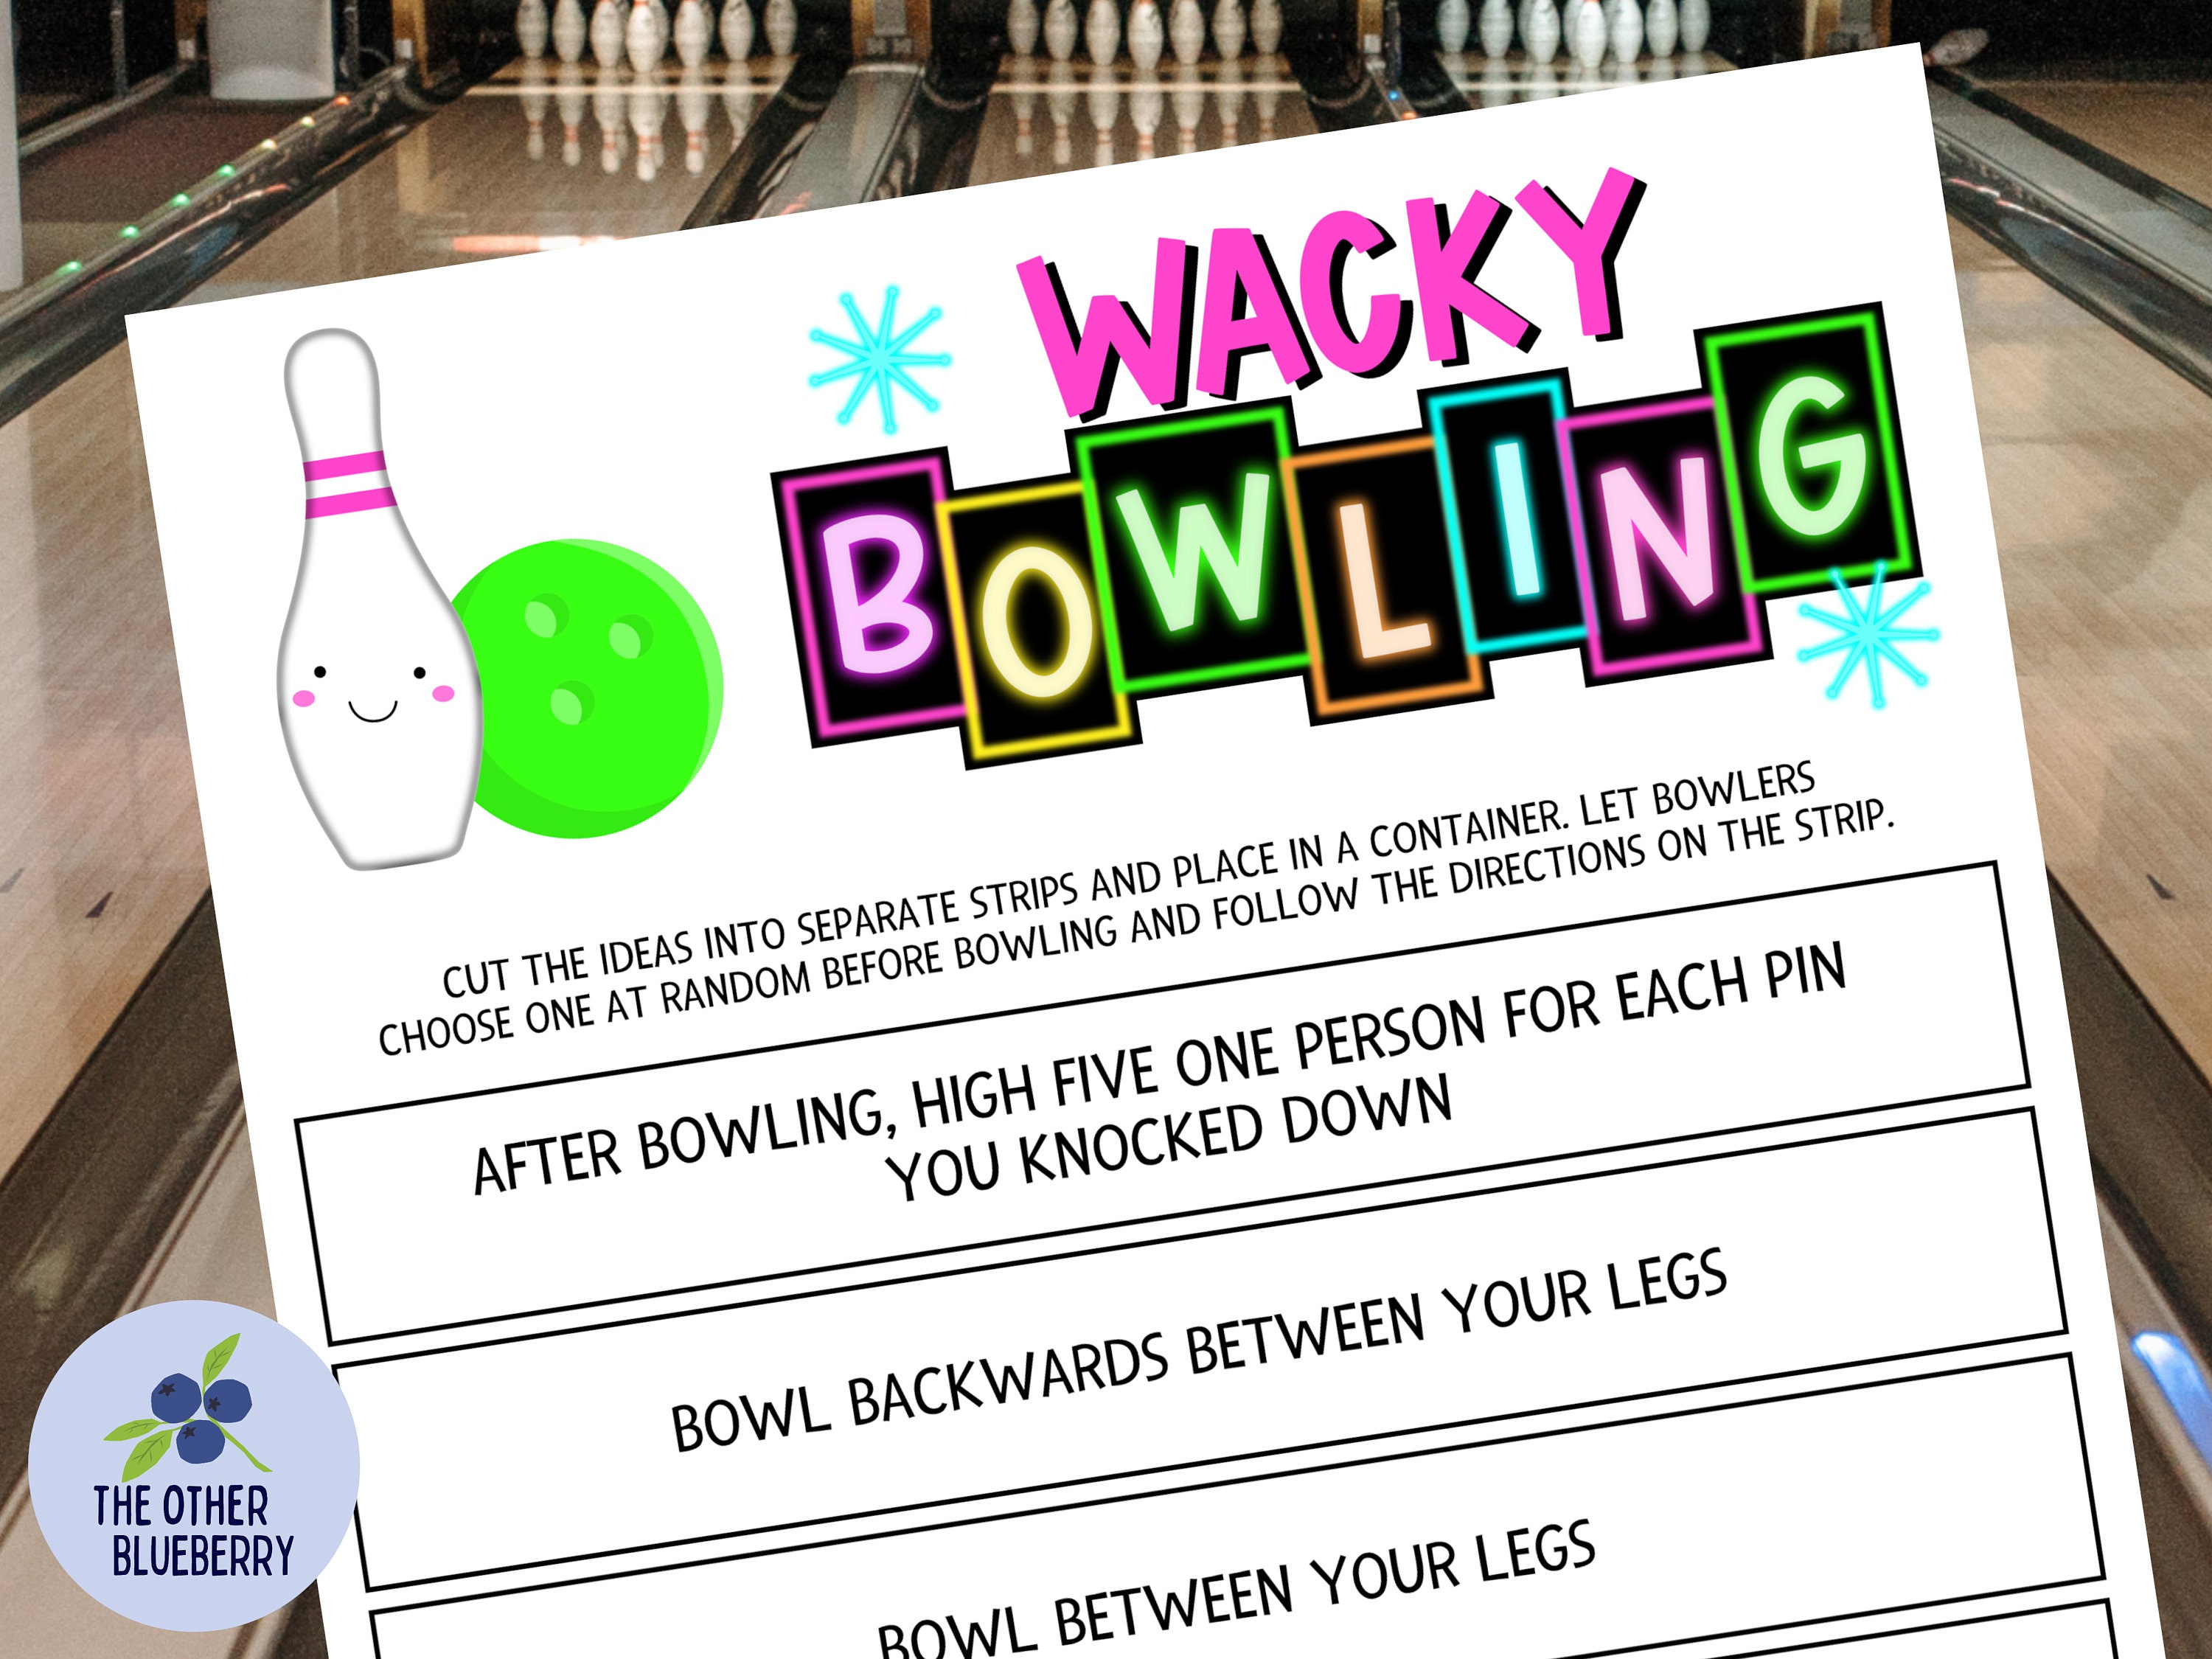 wife plays strip bowling